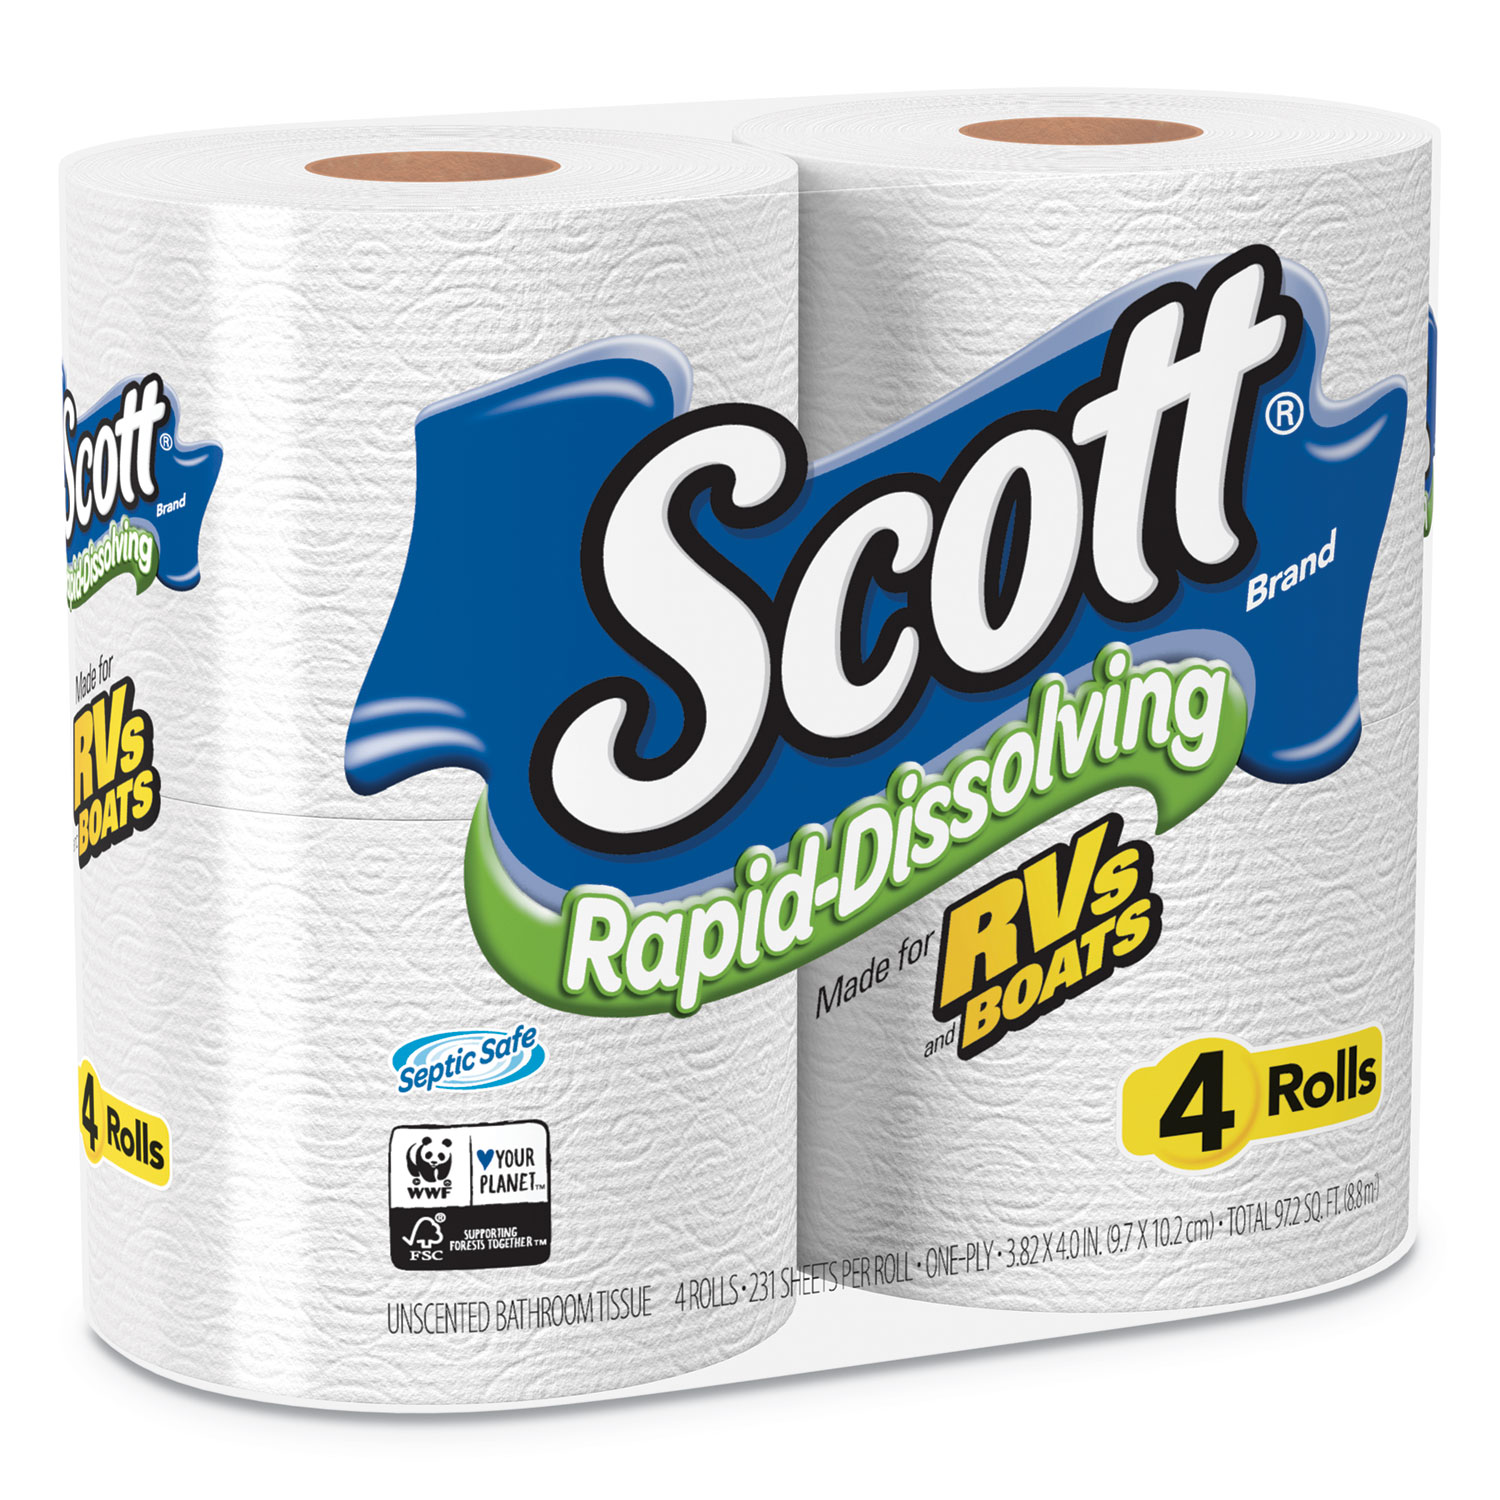 Rapid-Dissolving Toilet Paper, Bath Tissue, 1-Ply, White, 231 Sheets